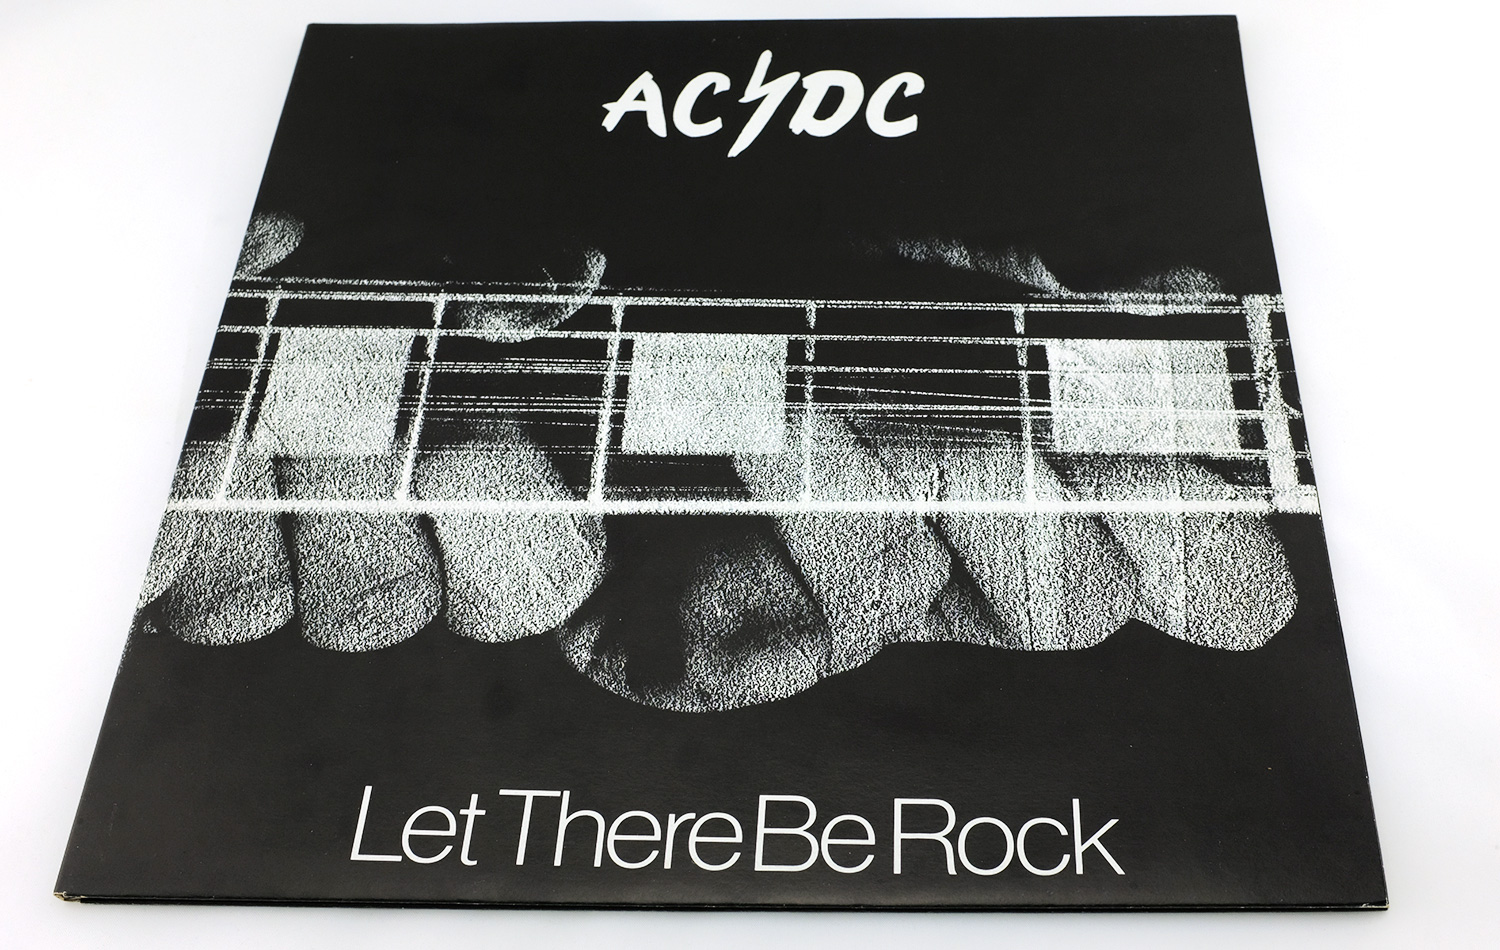 acdc album vinyl